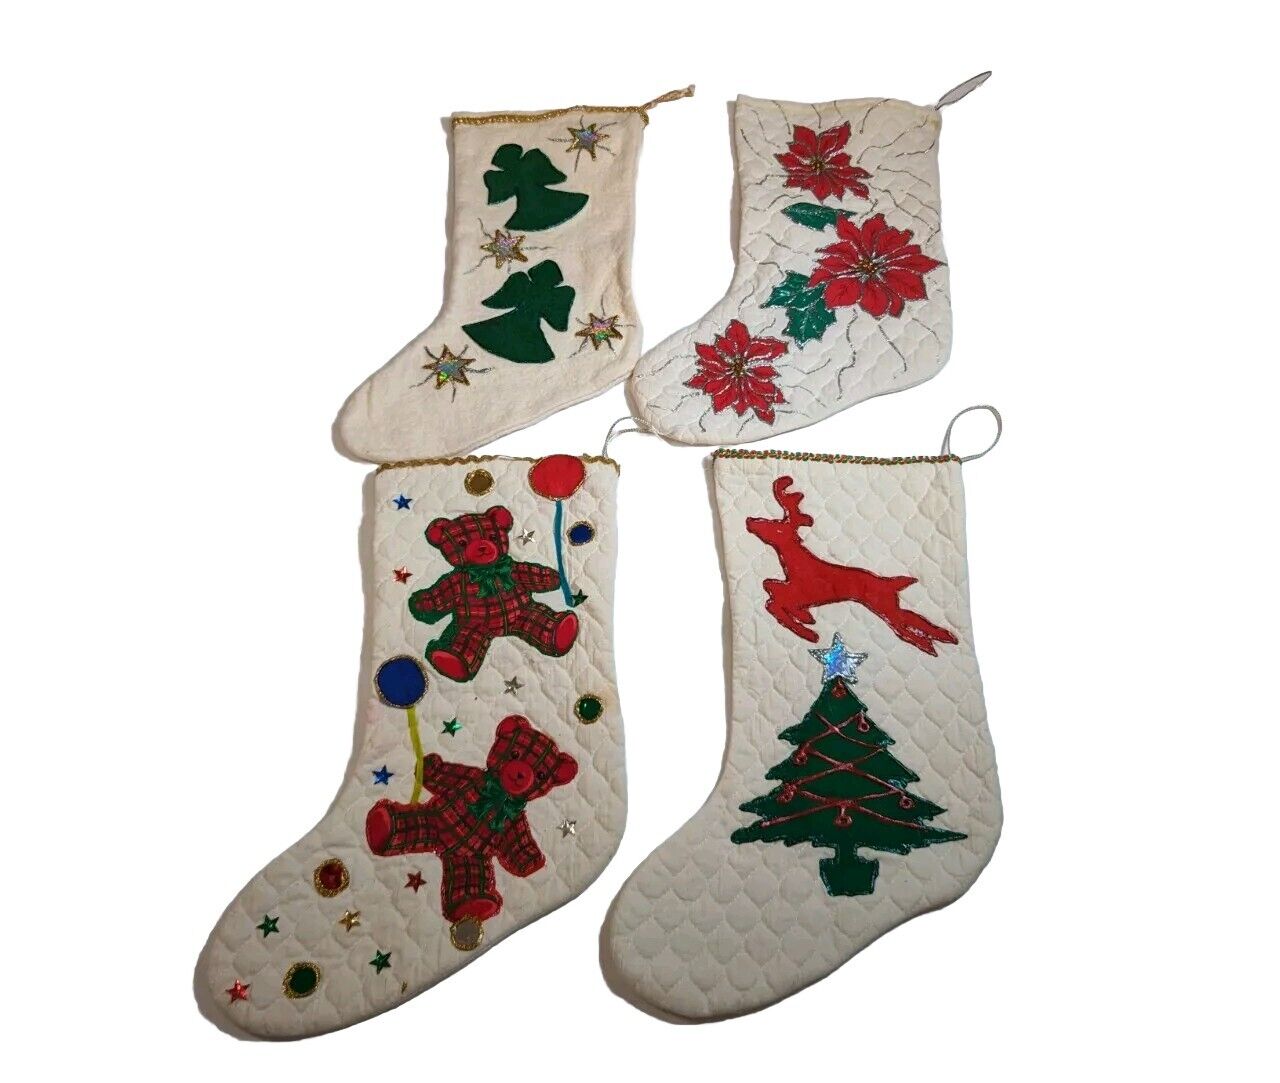 4 Vintage Quilted & Felt Sequin Glitter Christmas Stockings Handmade ( Need TLC)